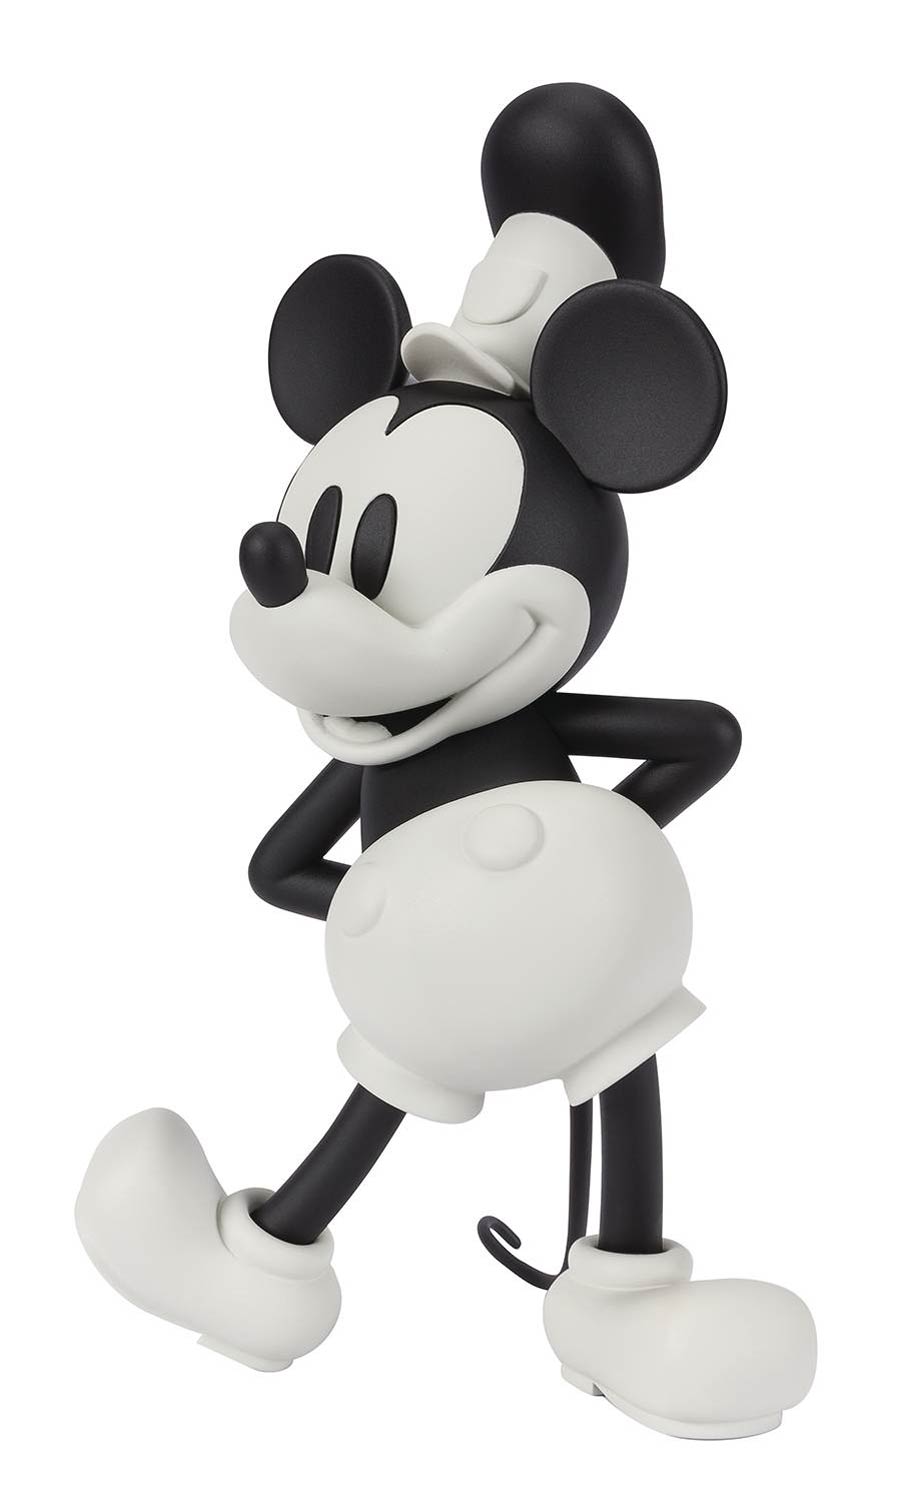 Mickey Mouse Figuarts ZERO - Steamboat Willie Figure